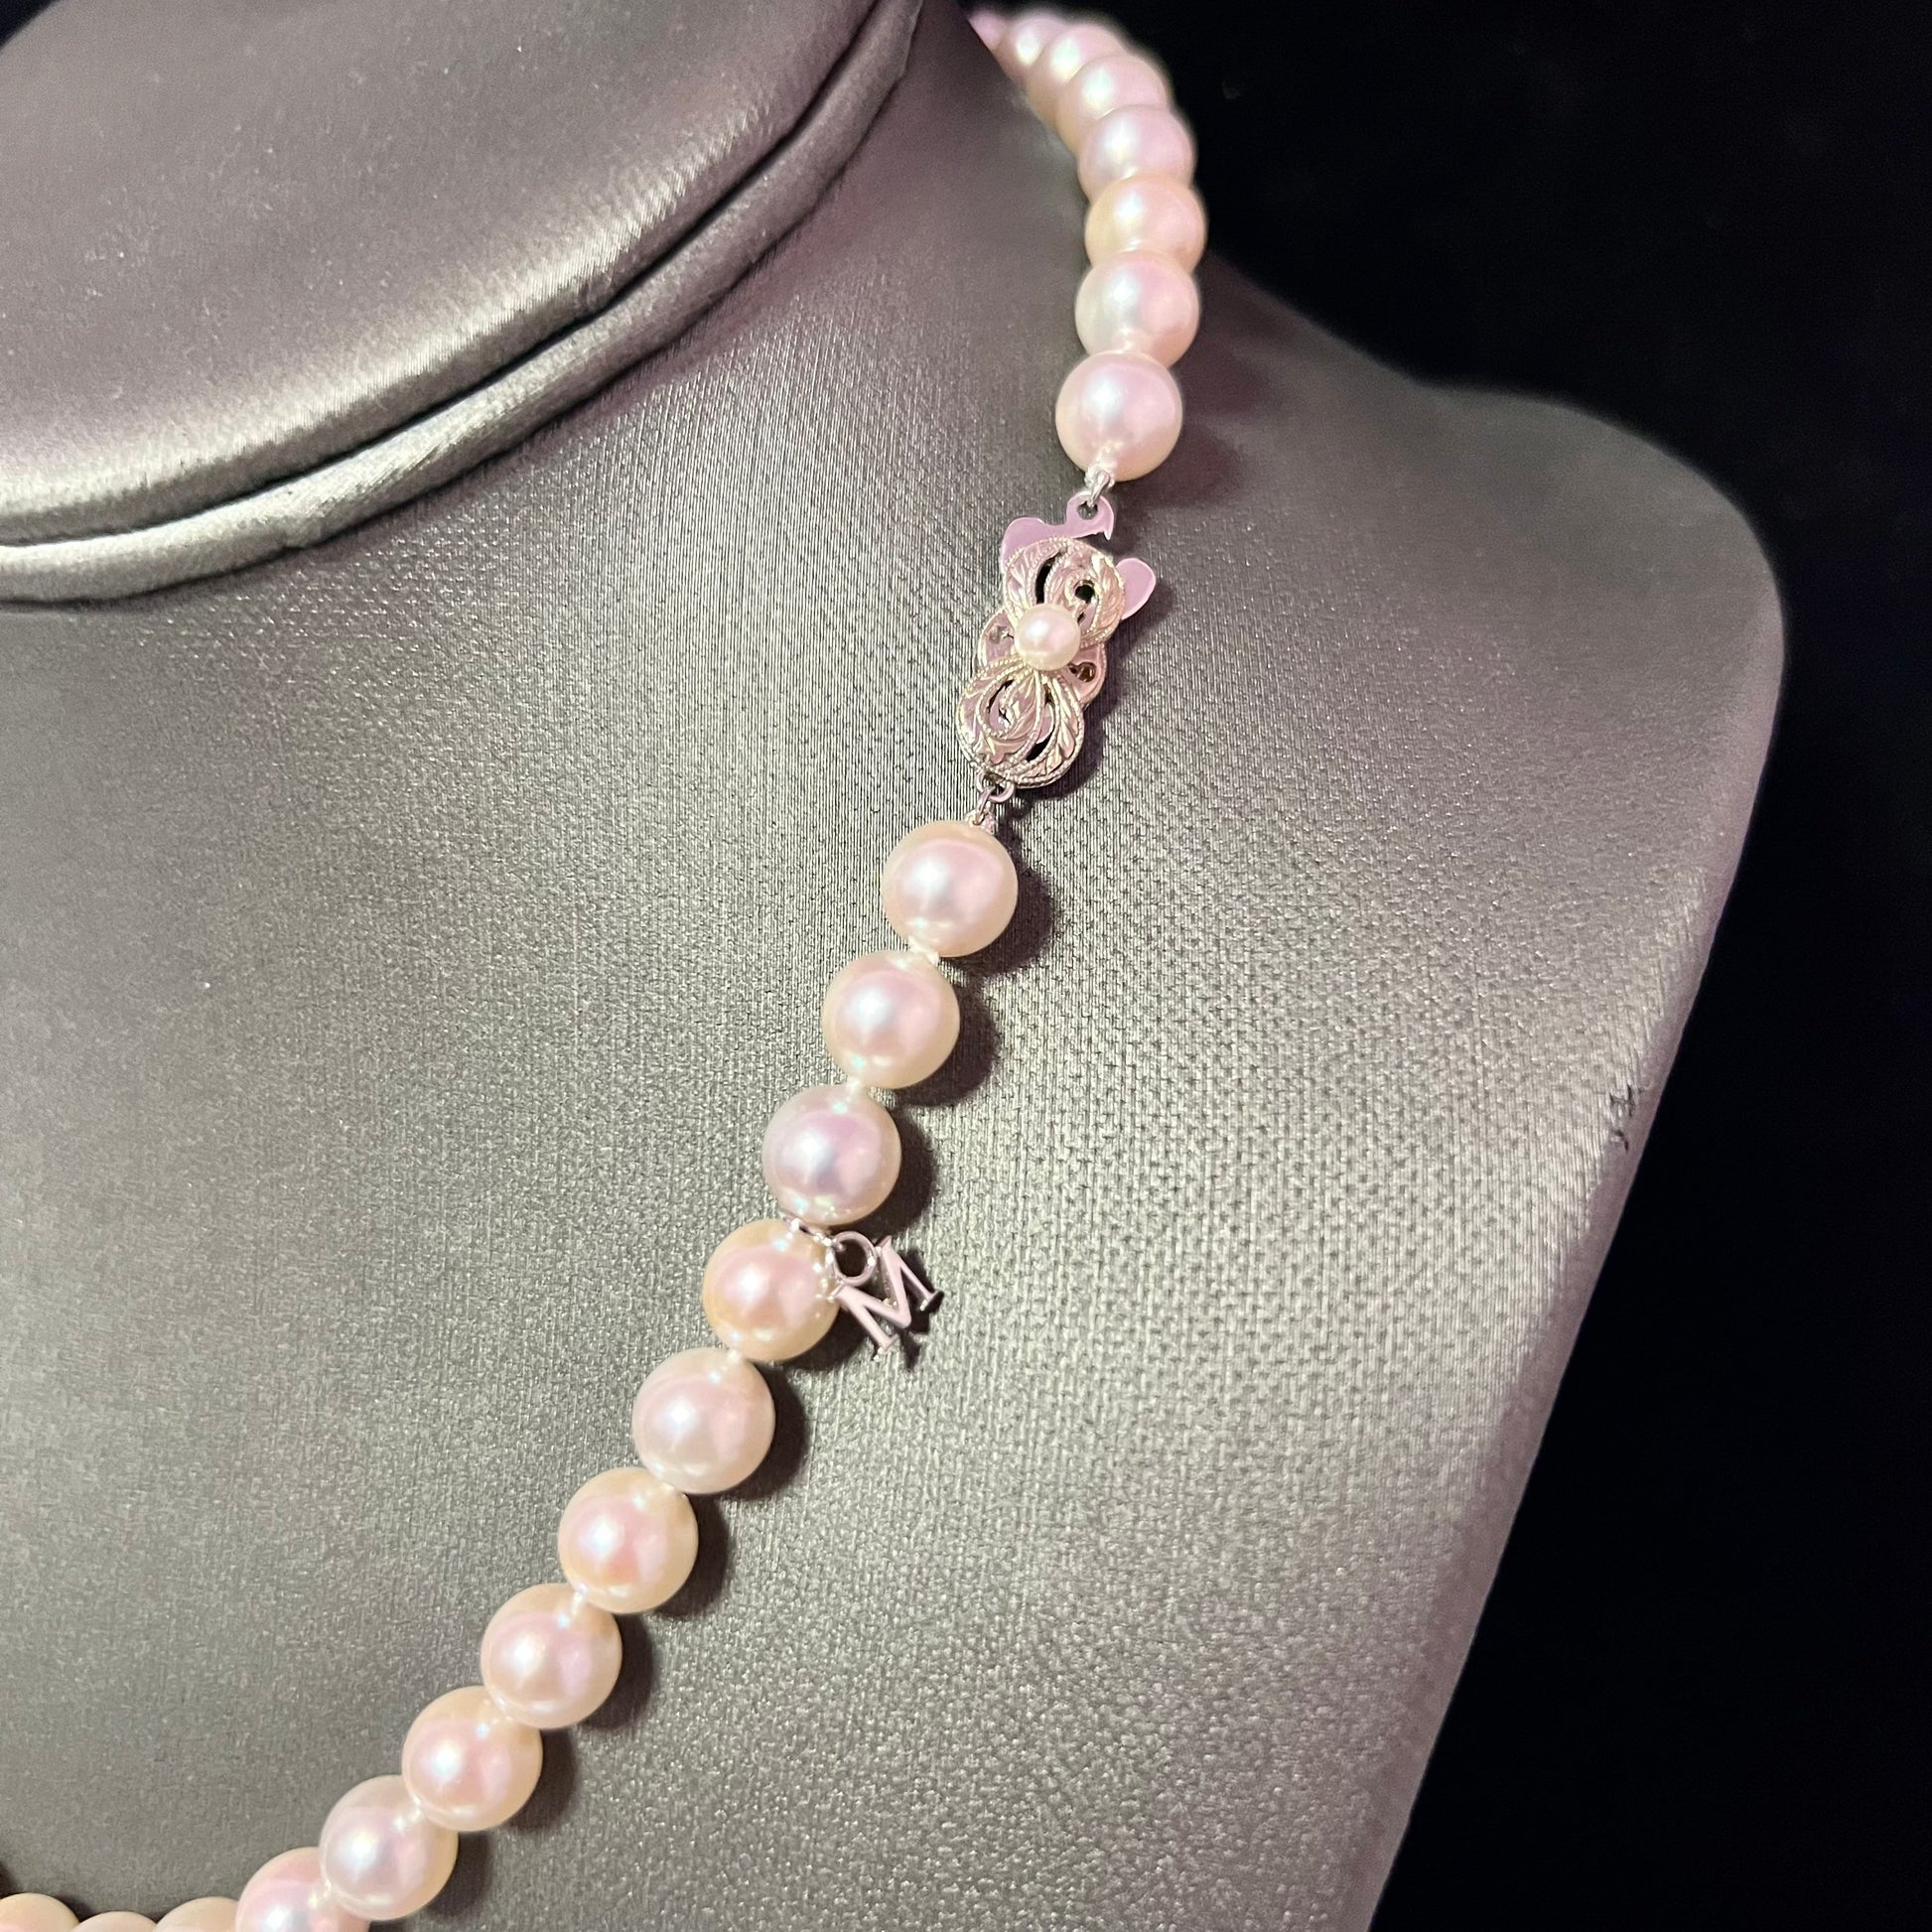 Mikimoto Estate Akoya Pearl Necklace 17" 18k W Gold 8 mm Certified $11,450 311936 - Certified Fine Jewelry